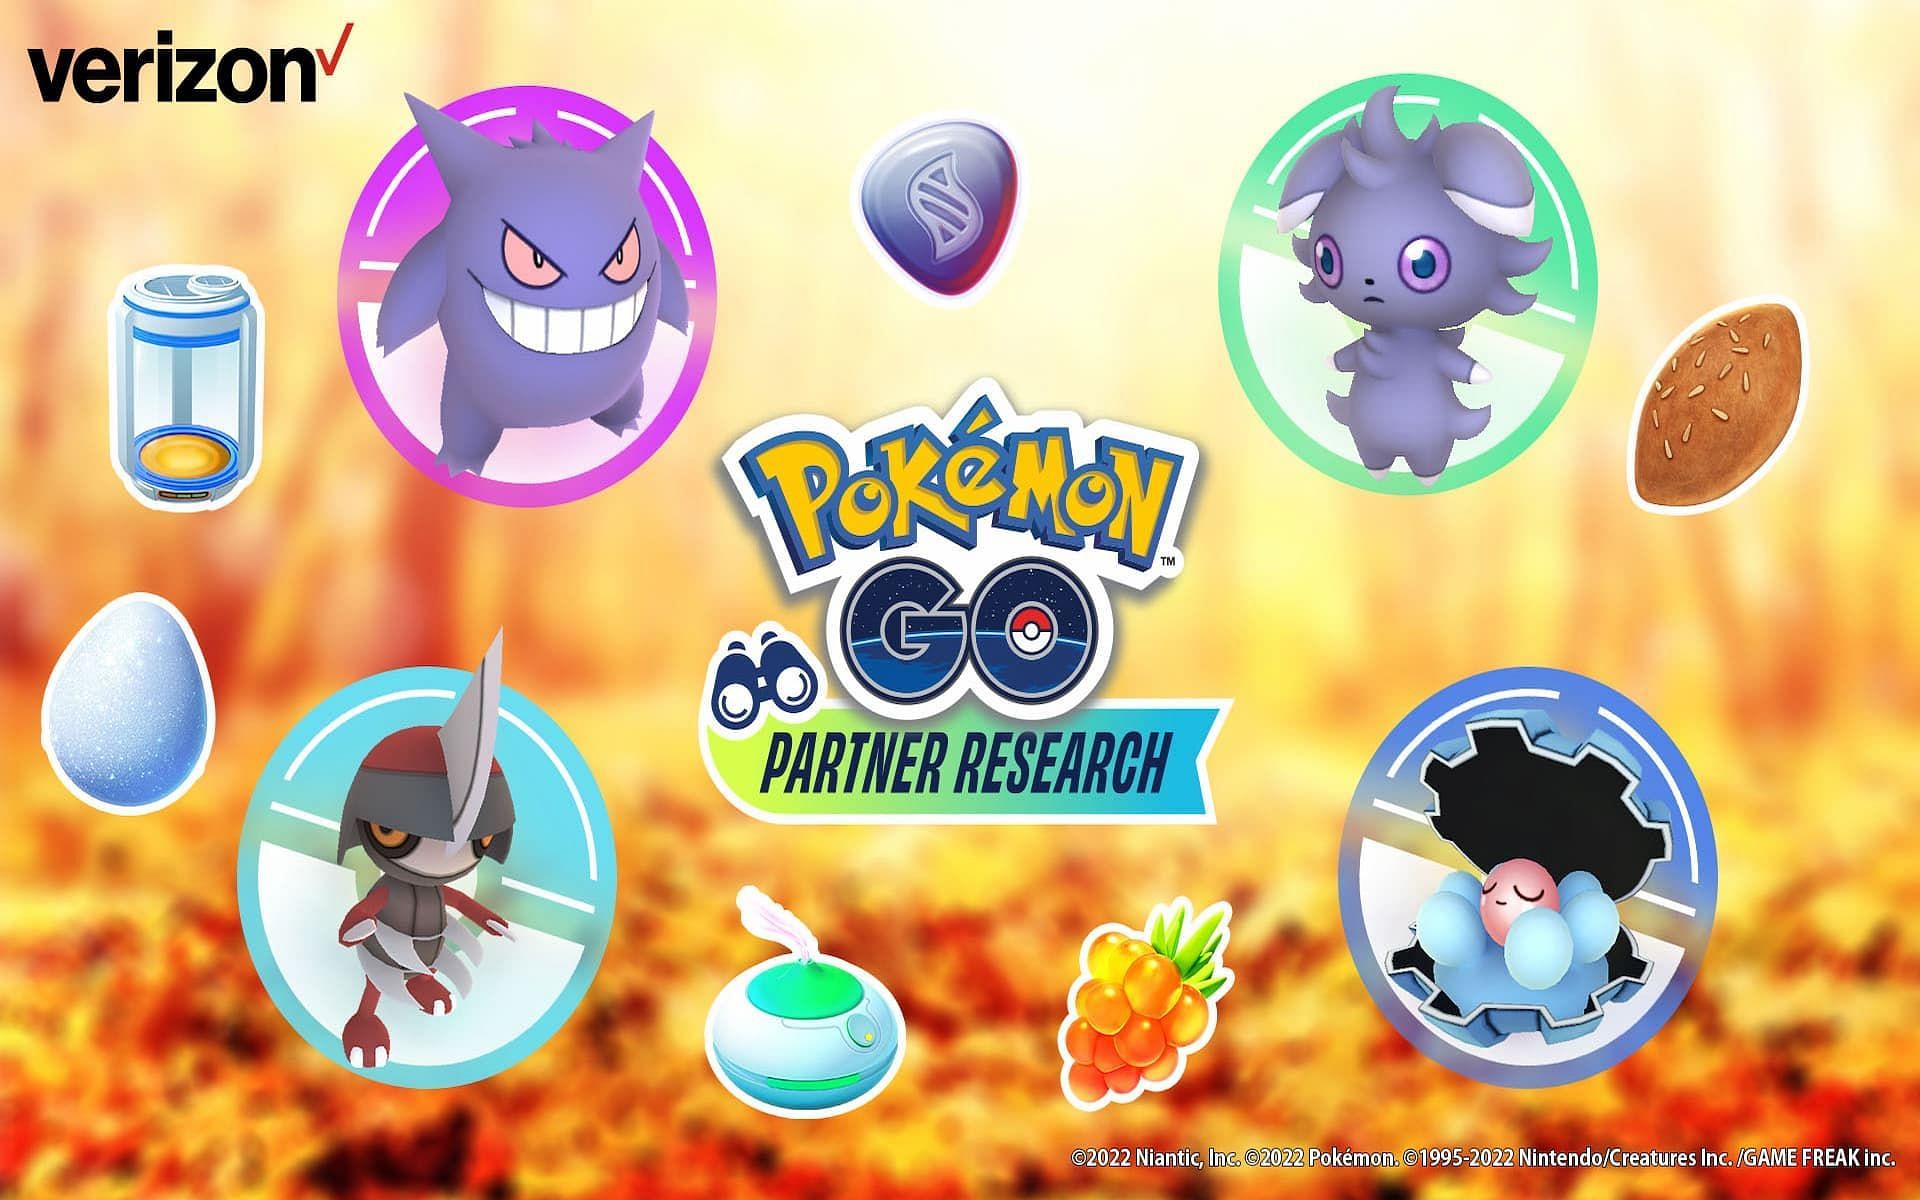 The promotional image for the Verizon x Pokemon GO Partner Research (Image via Niantic)